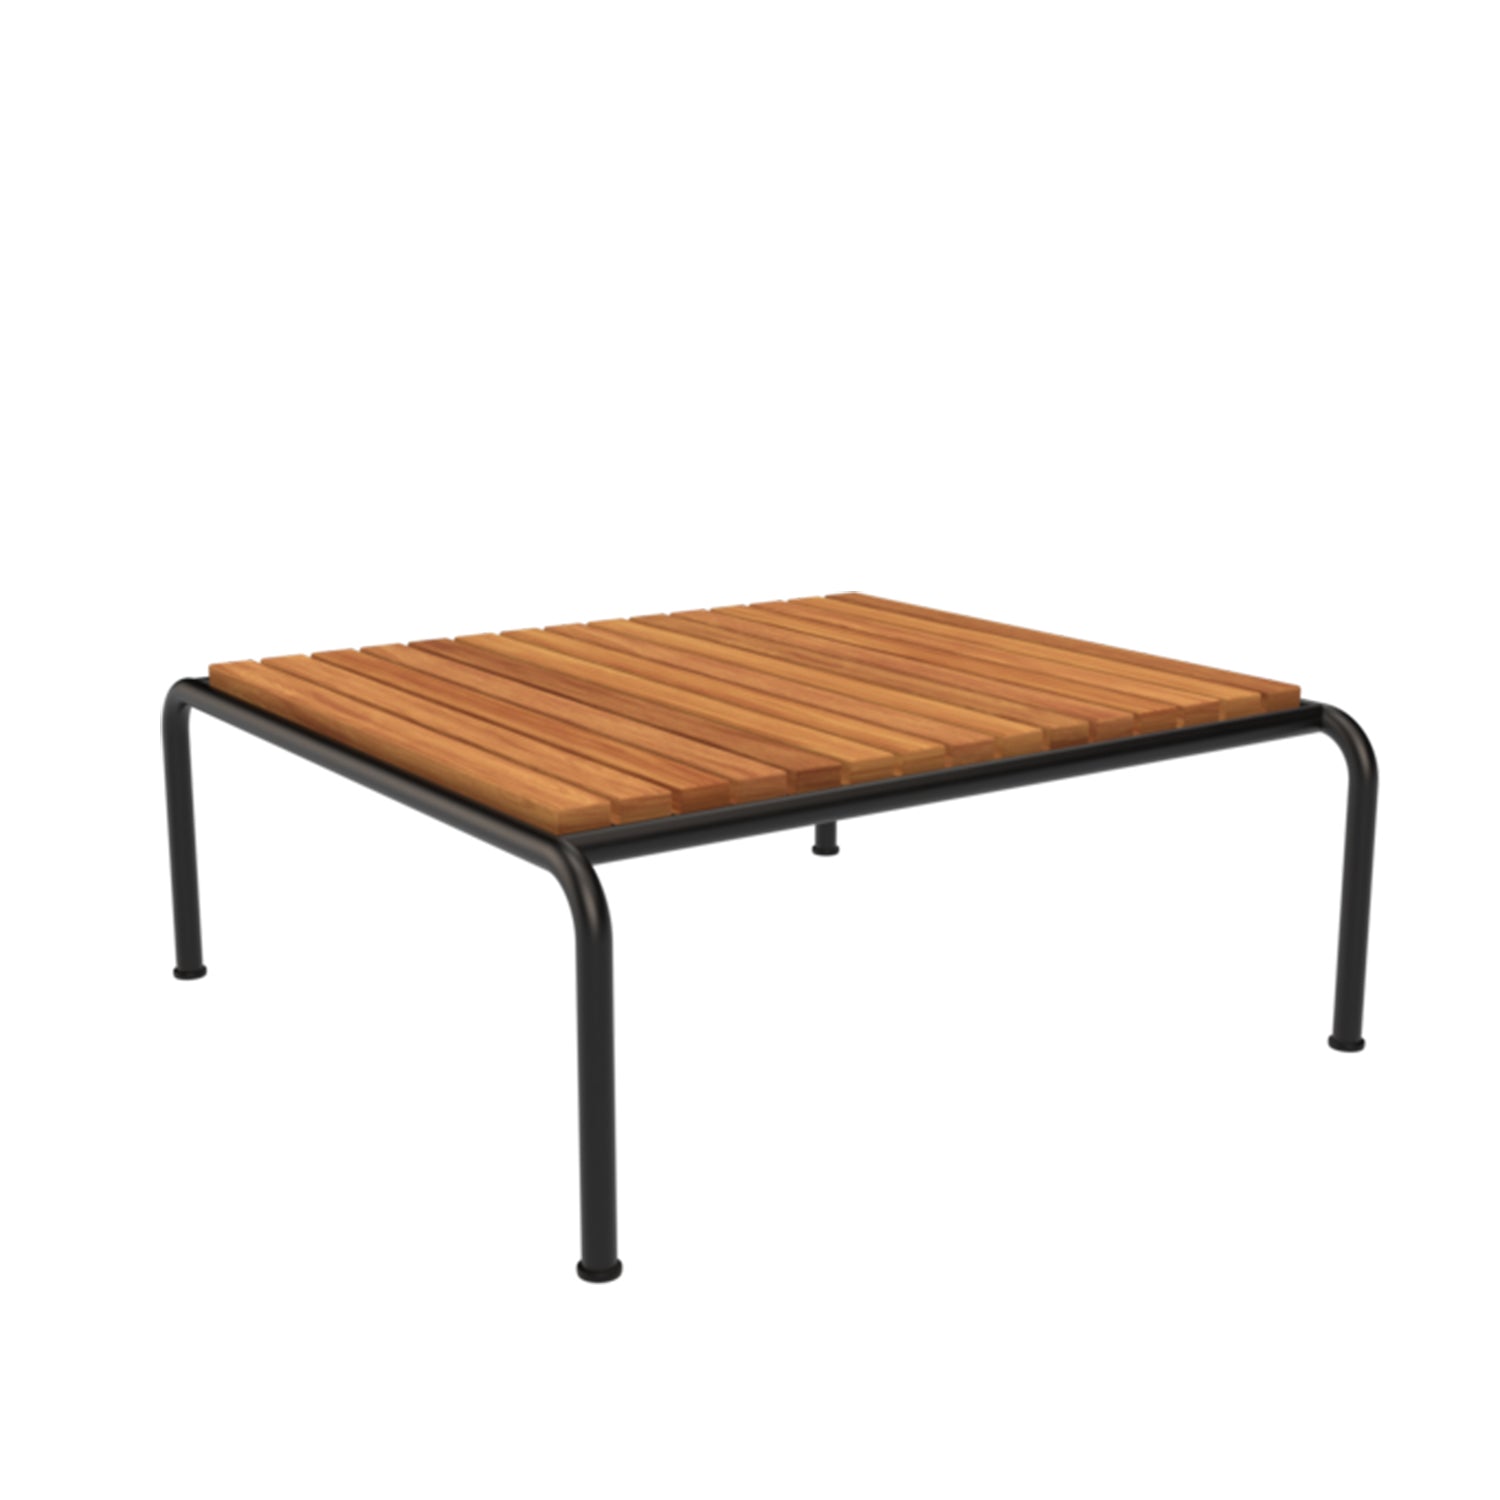 Avon Table - The Design Choice